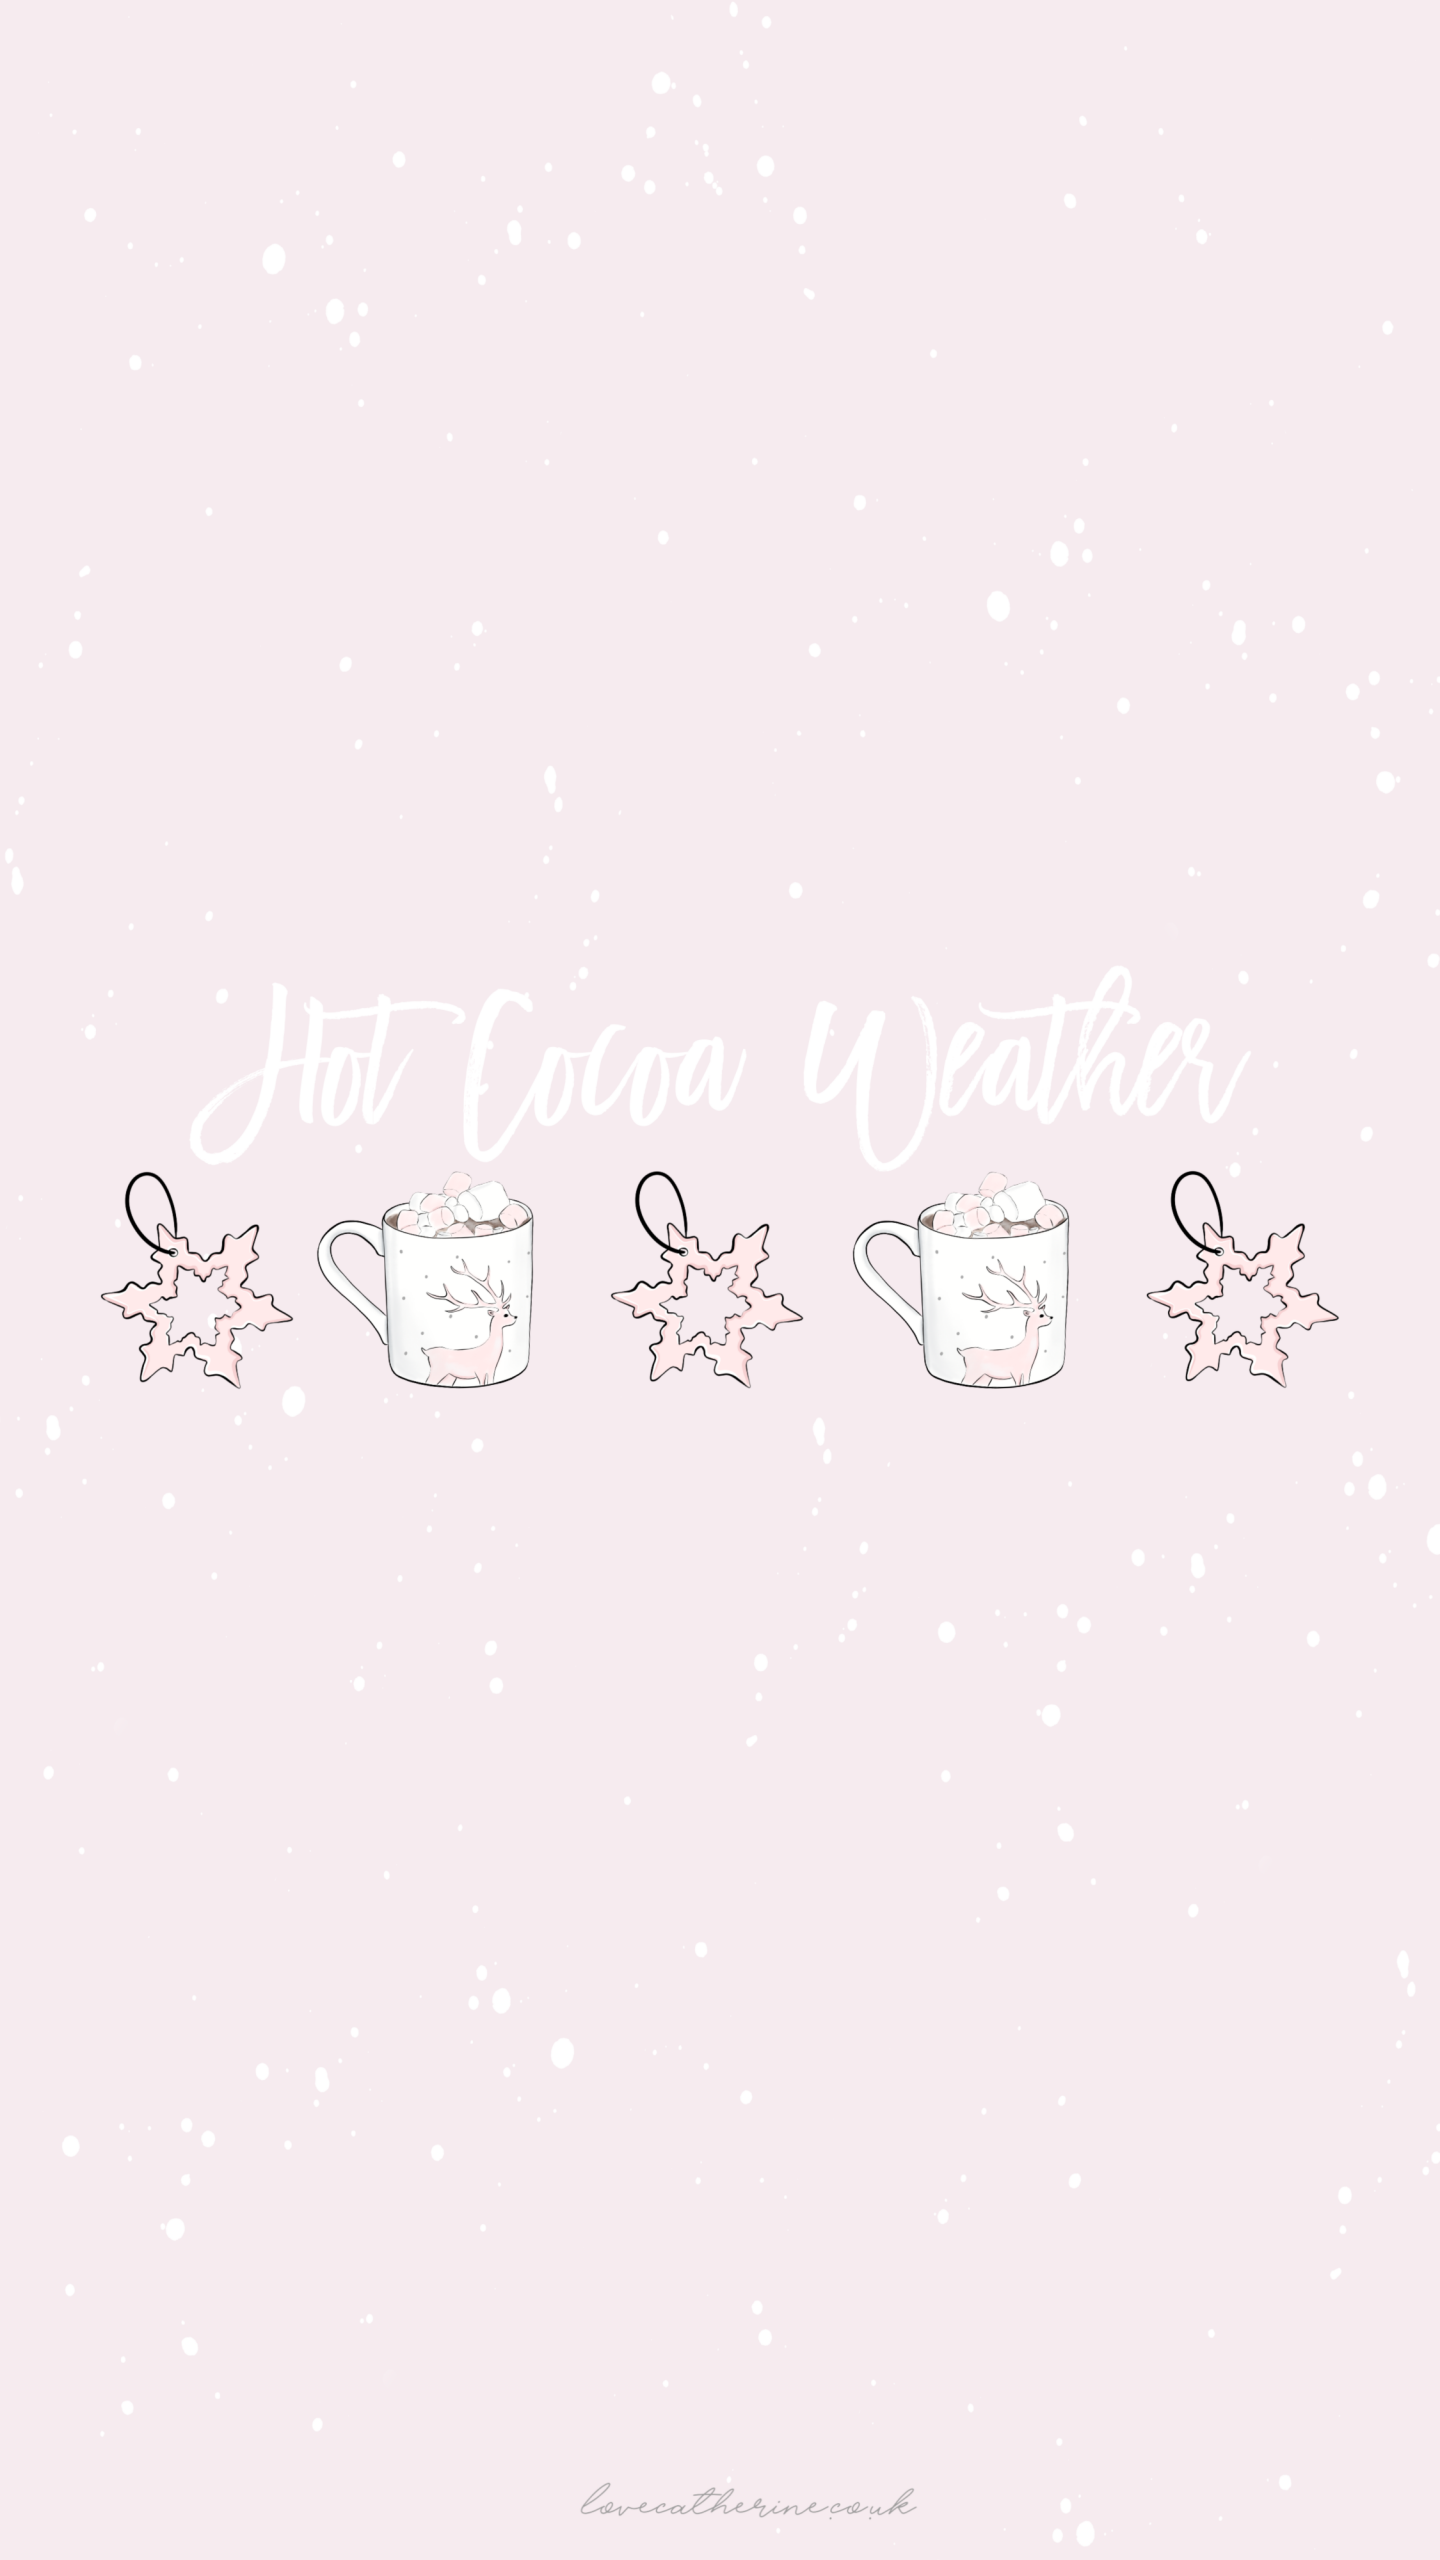 Free Cute & Girly Winter Phone Wallpaper